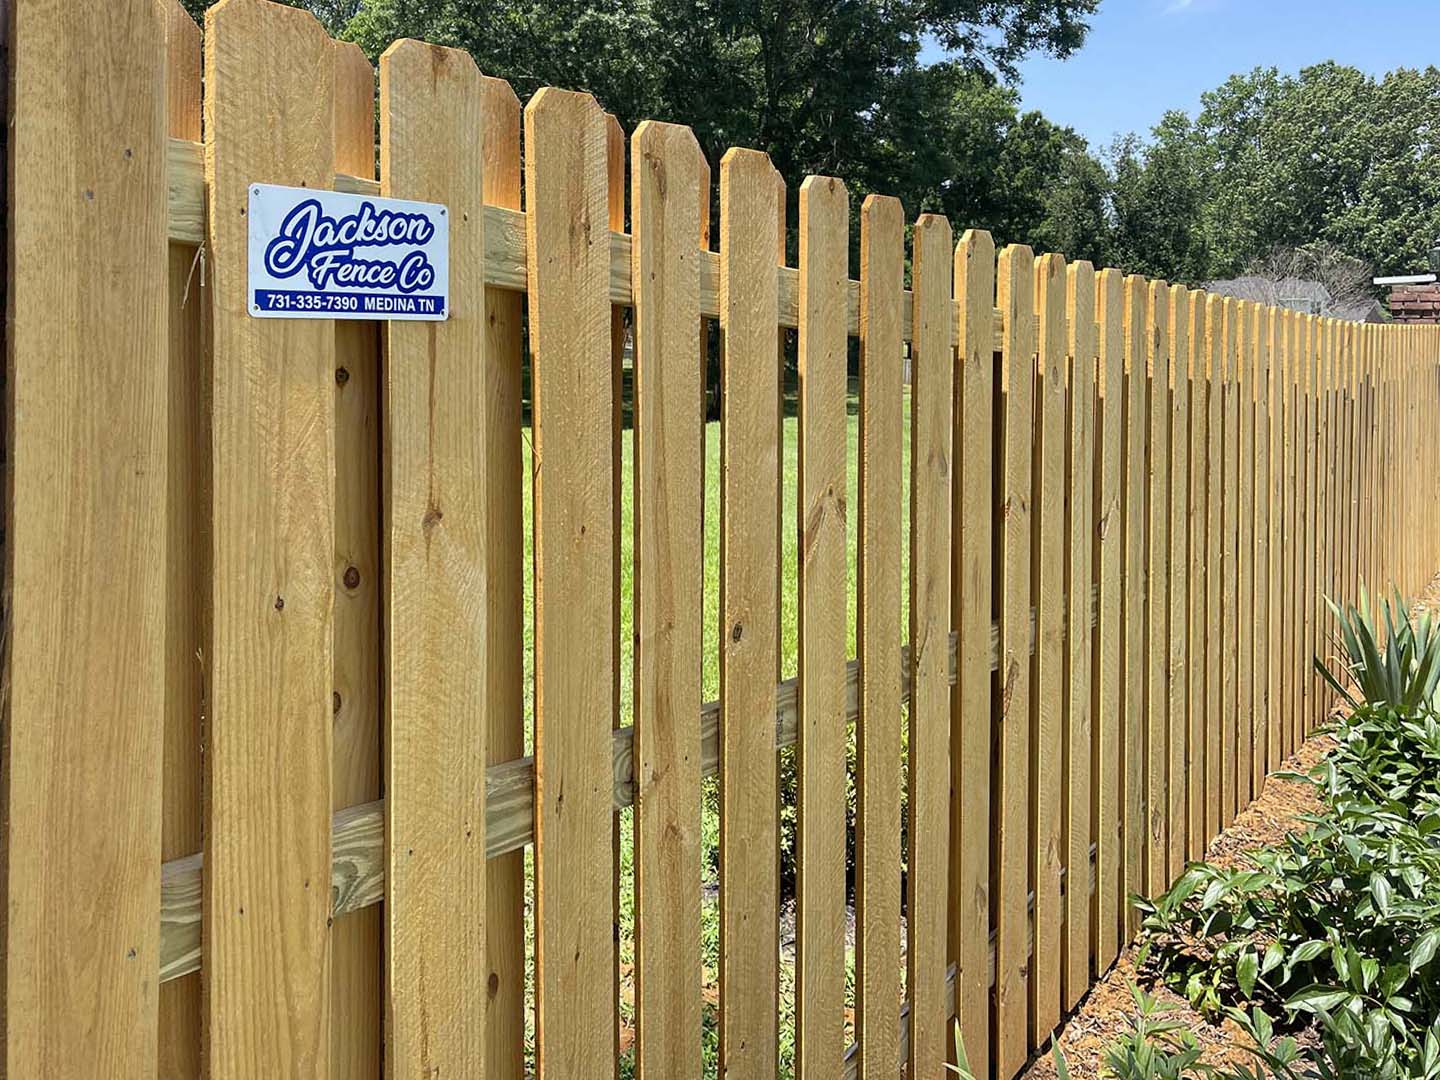  Trenton TN Shadowbox style wood fence